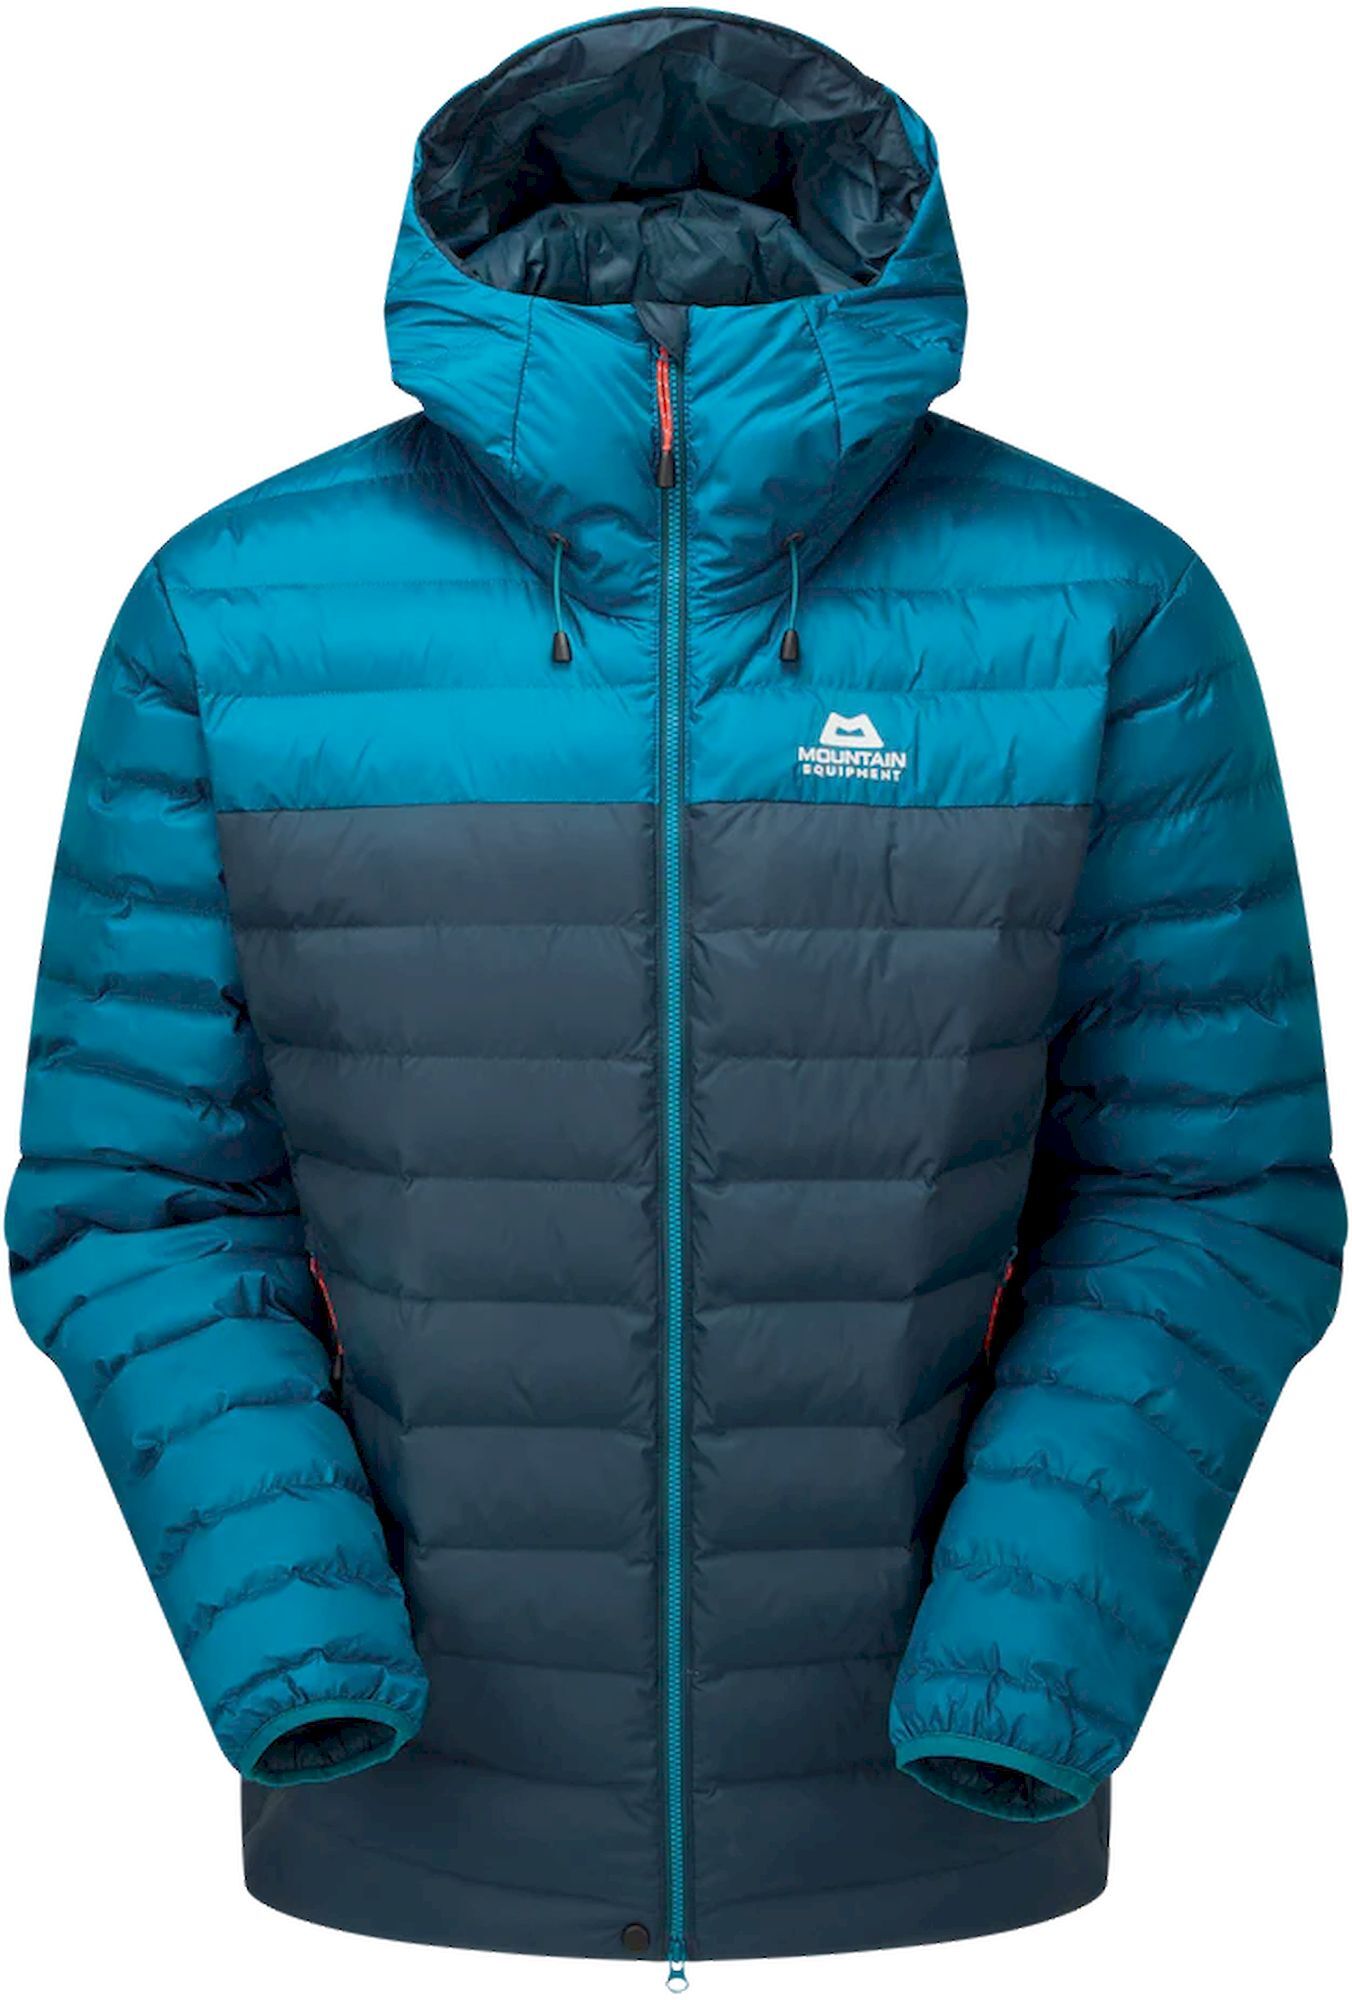 Mountain Equipment Superflux Jacket - Synthetic jacket - Men's